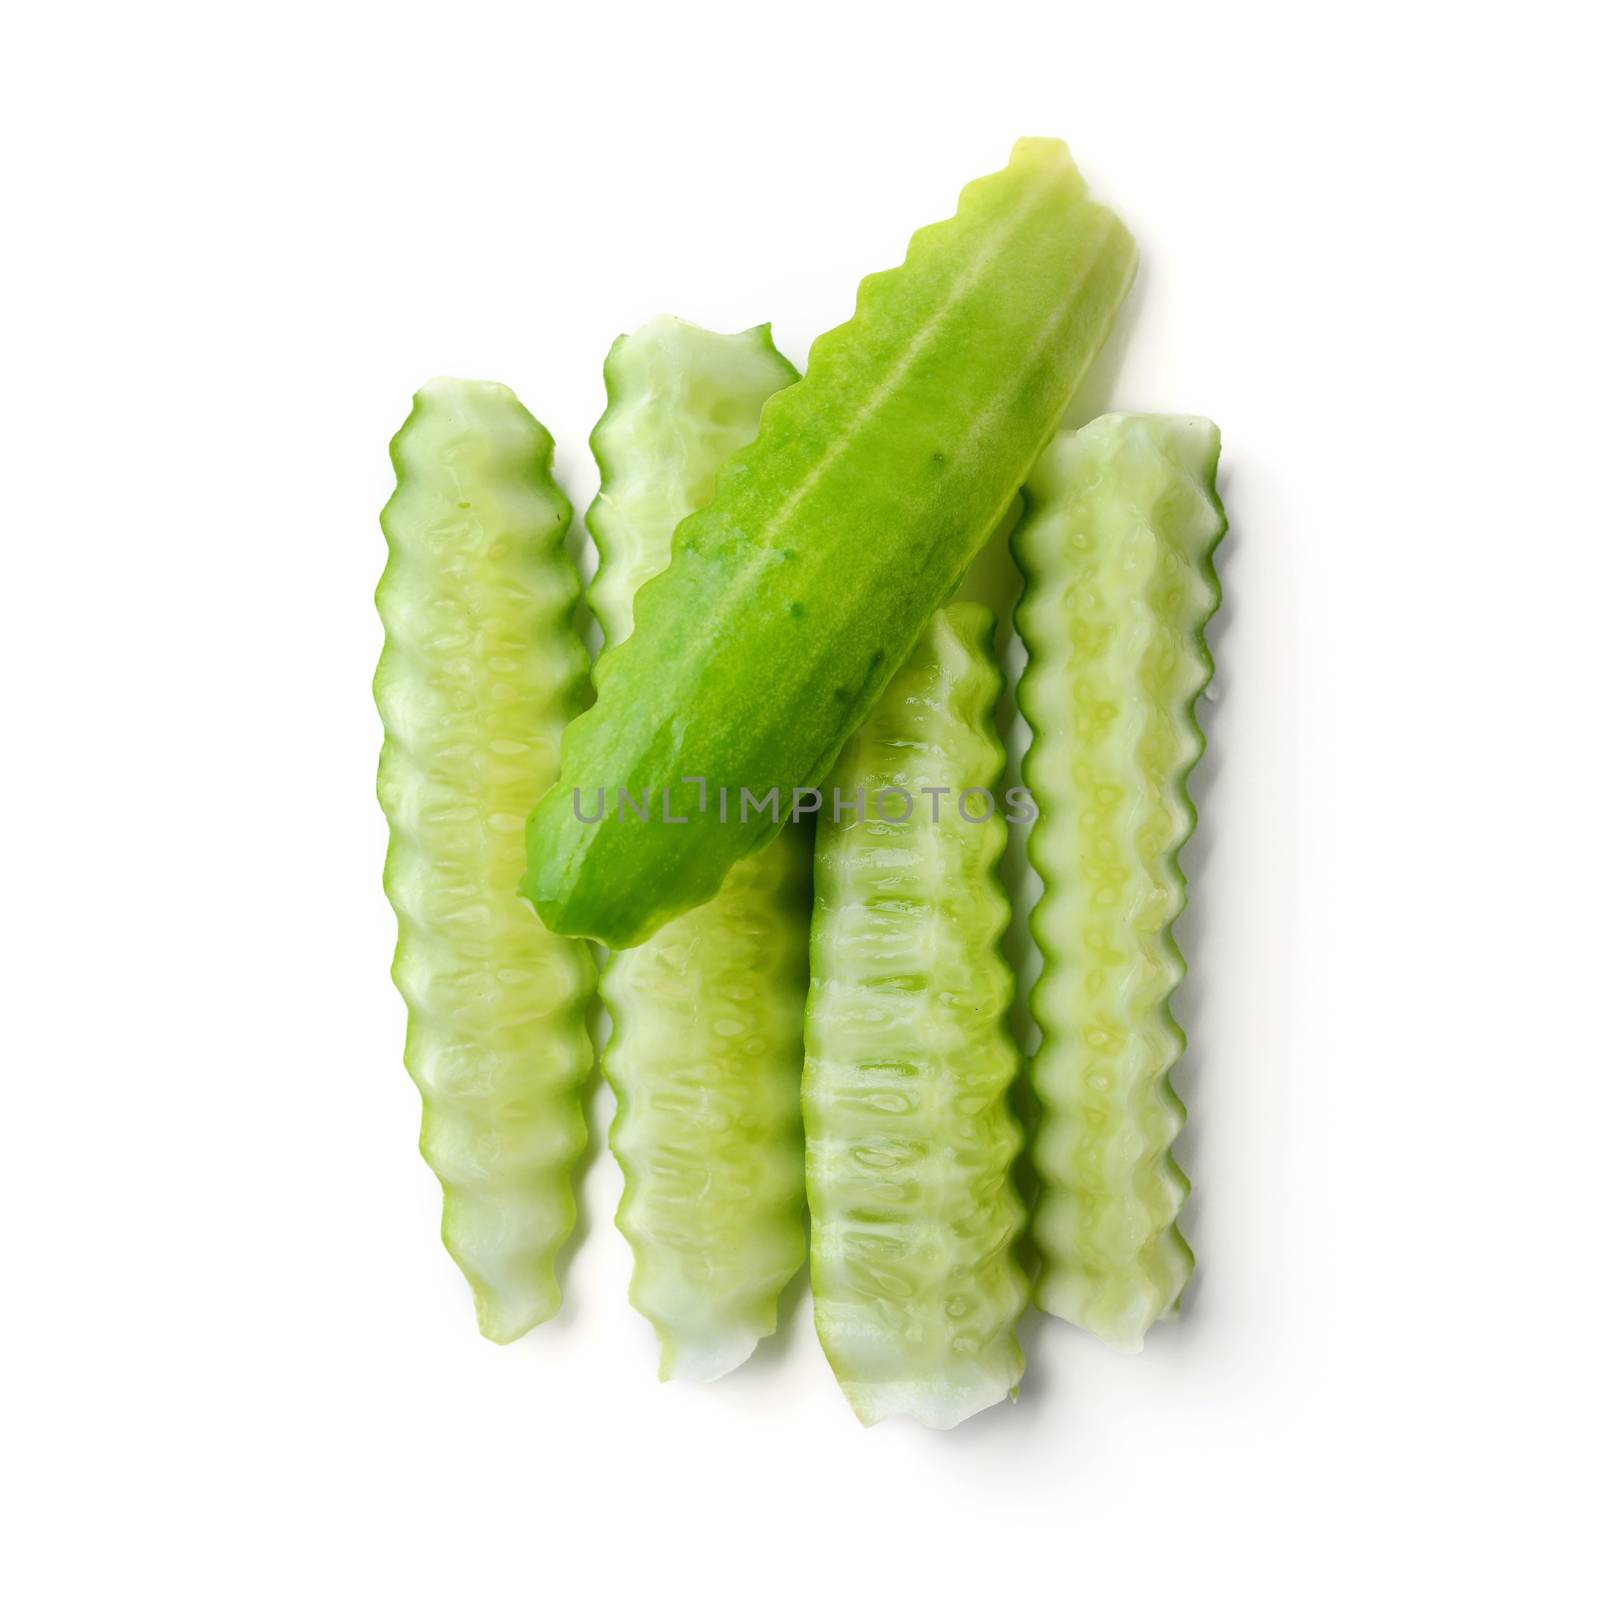 cucumber by antpkr